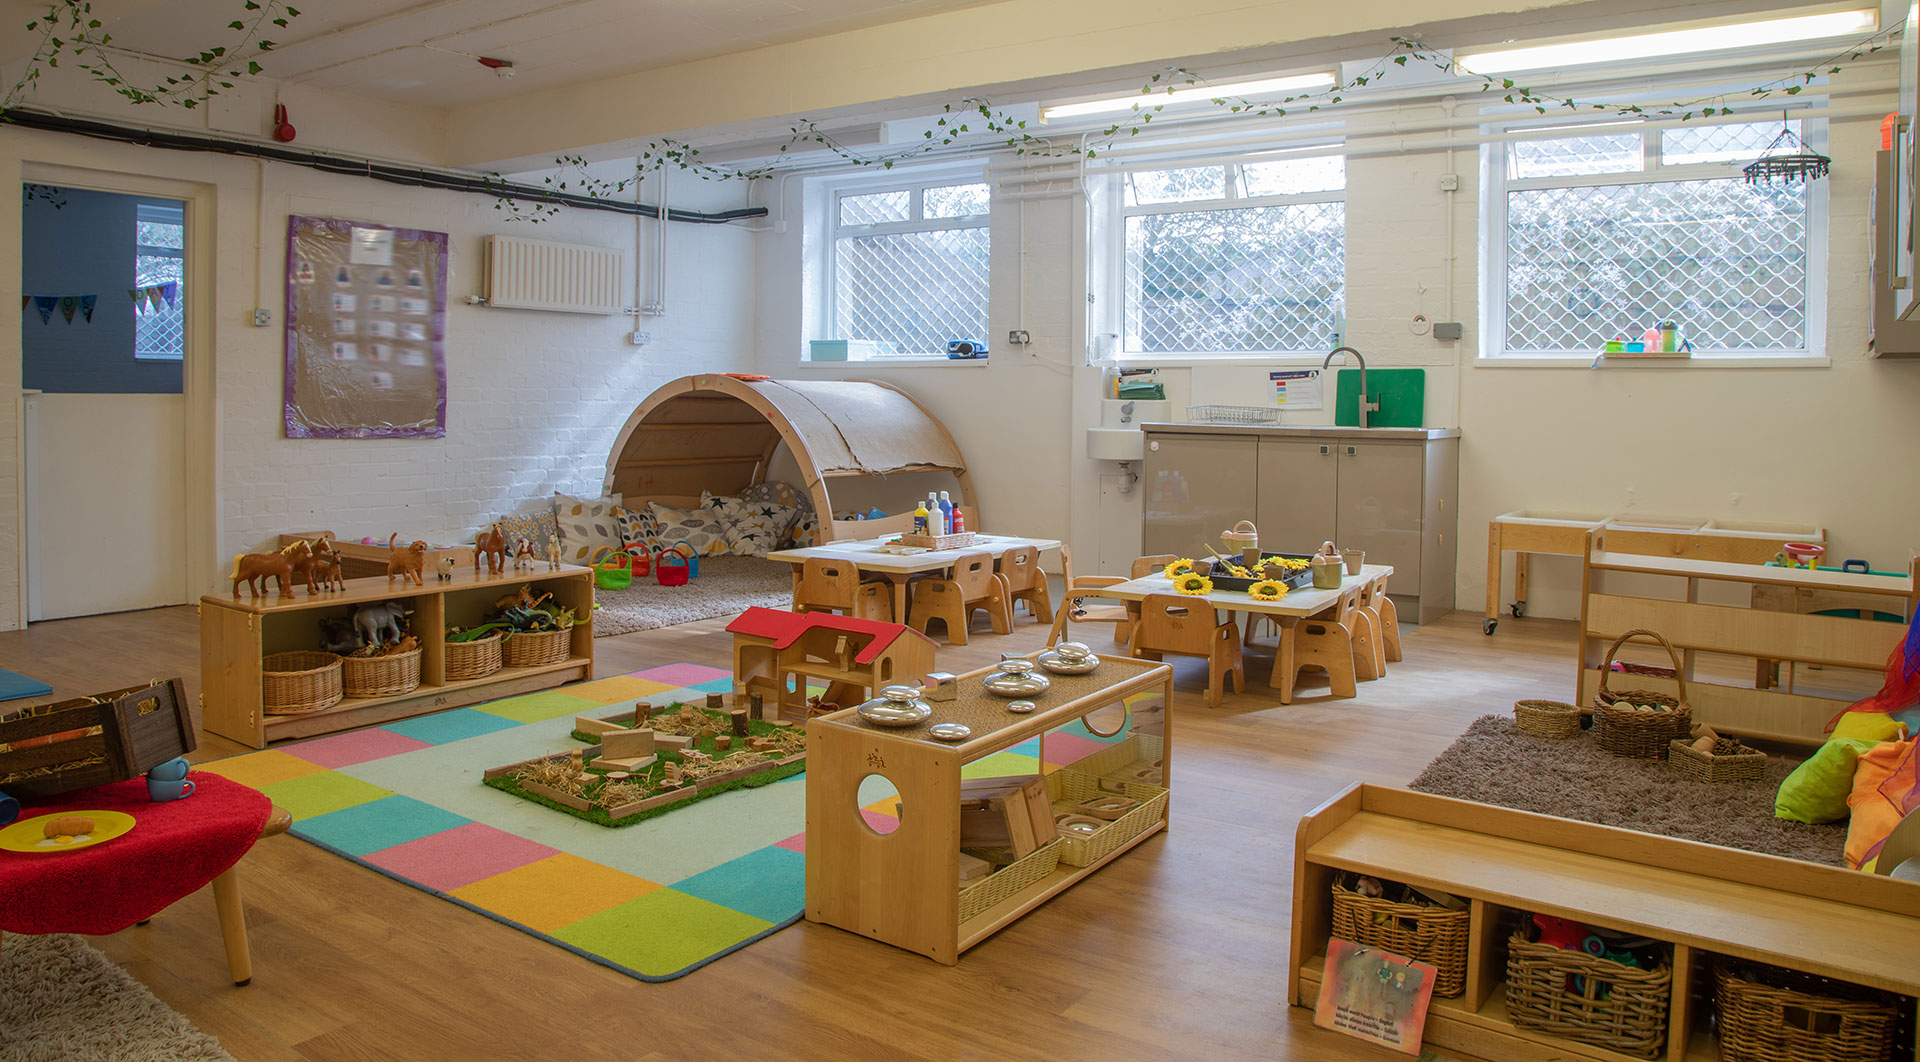 Eltham Green Day Nursery and Preschool baby room